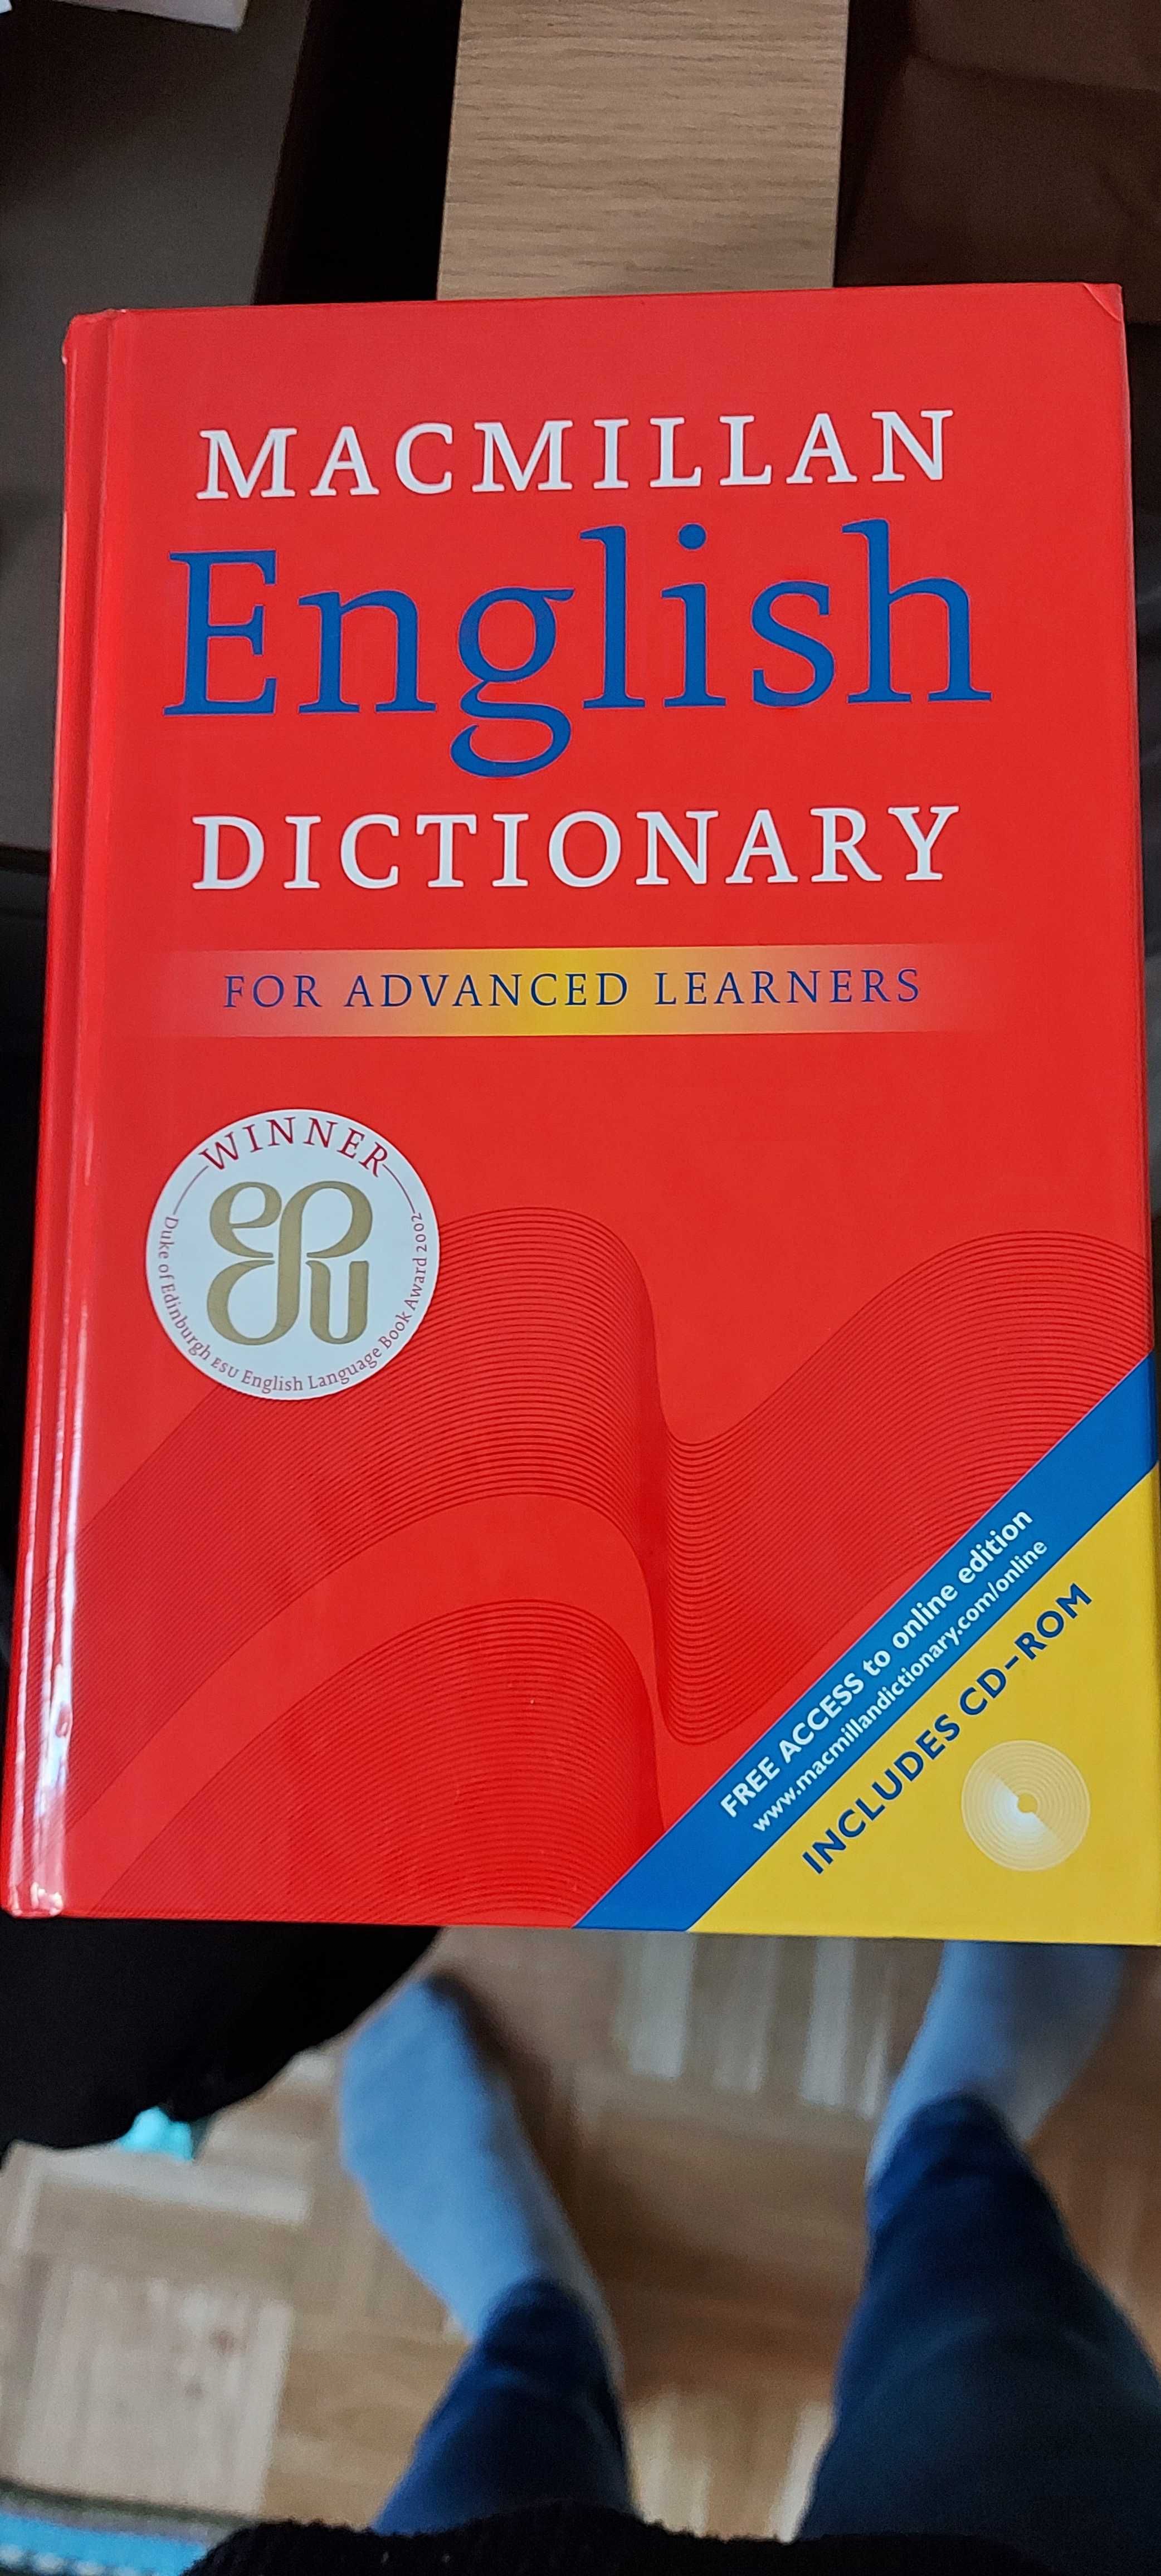 Słownik MACMILLAN English Dictionary for advanced learners